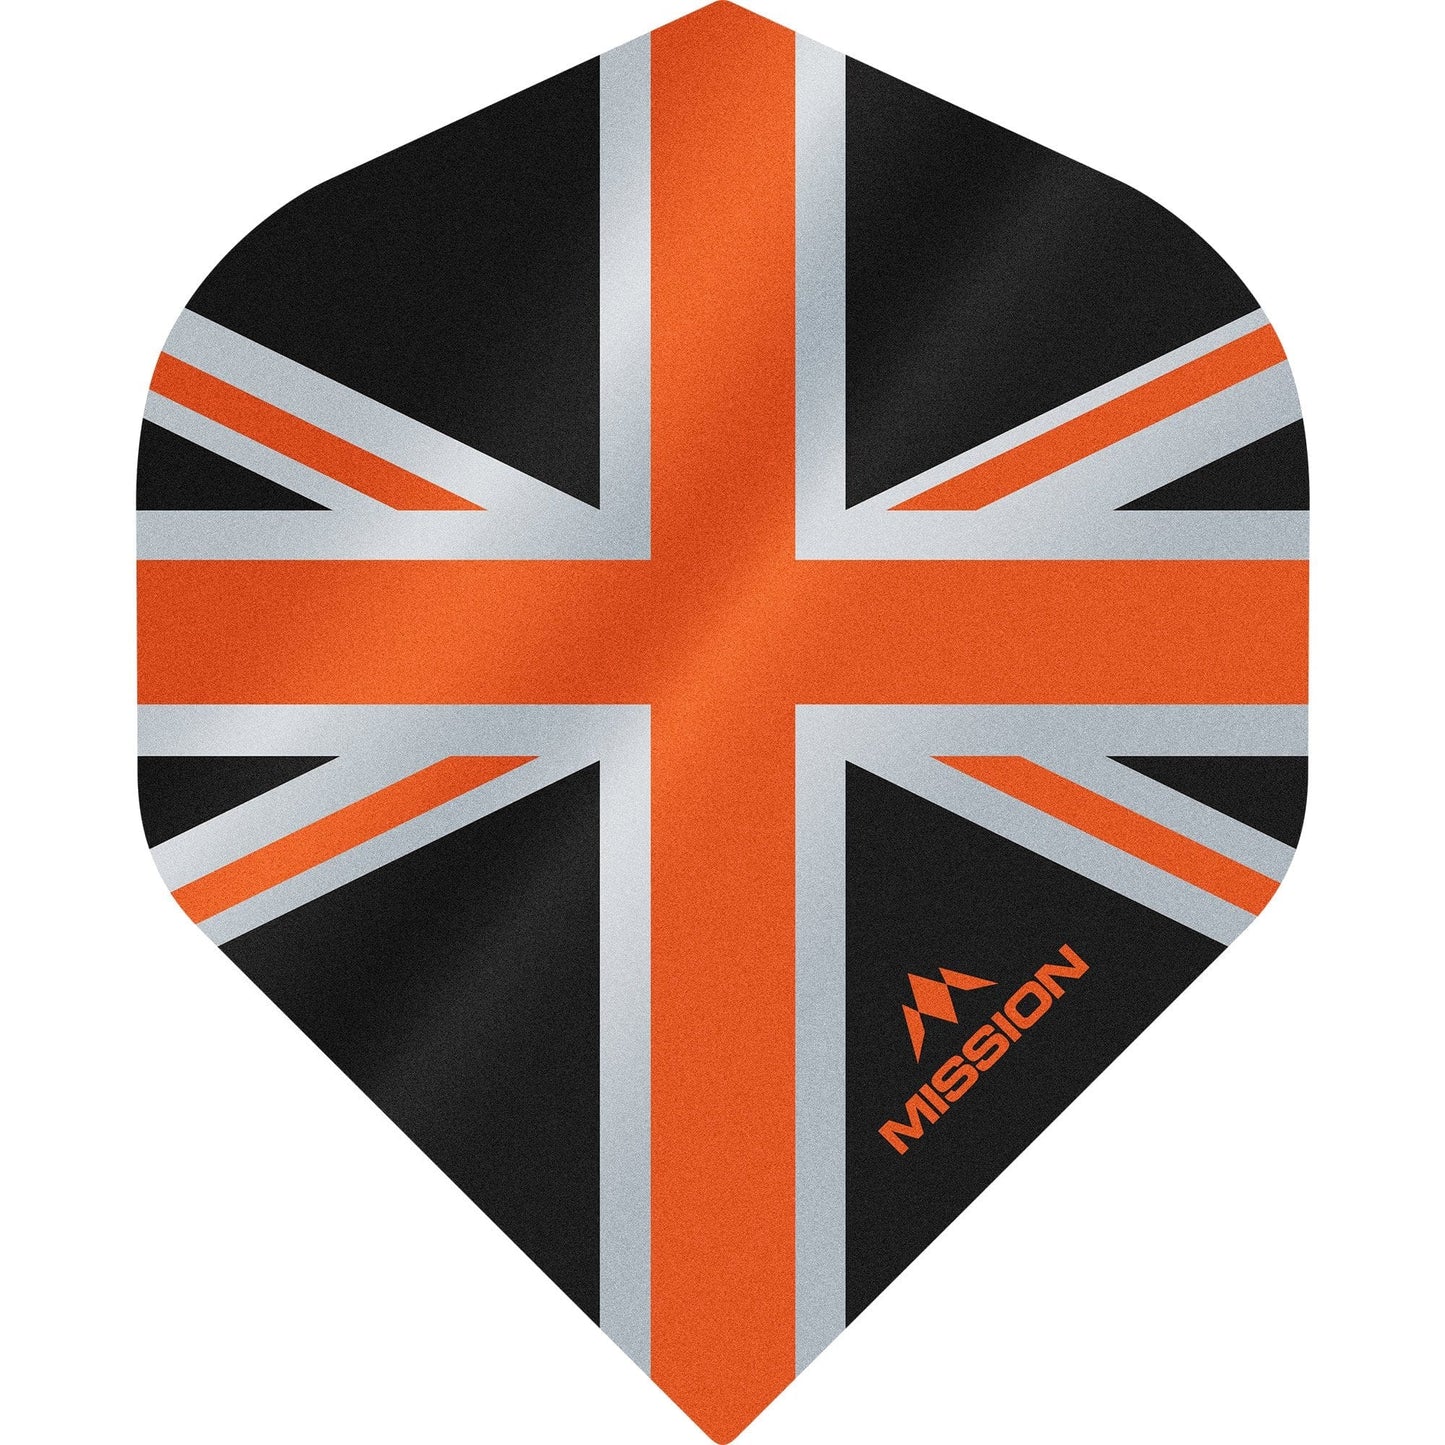 Mission Alliance Union Jack Dart Flights - No2 - Std - Black Black Orange